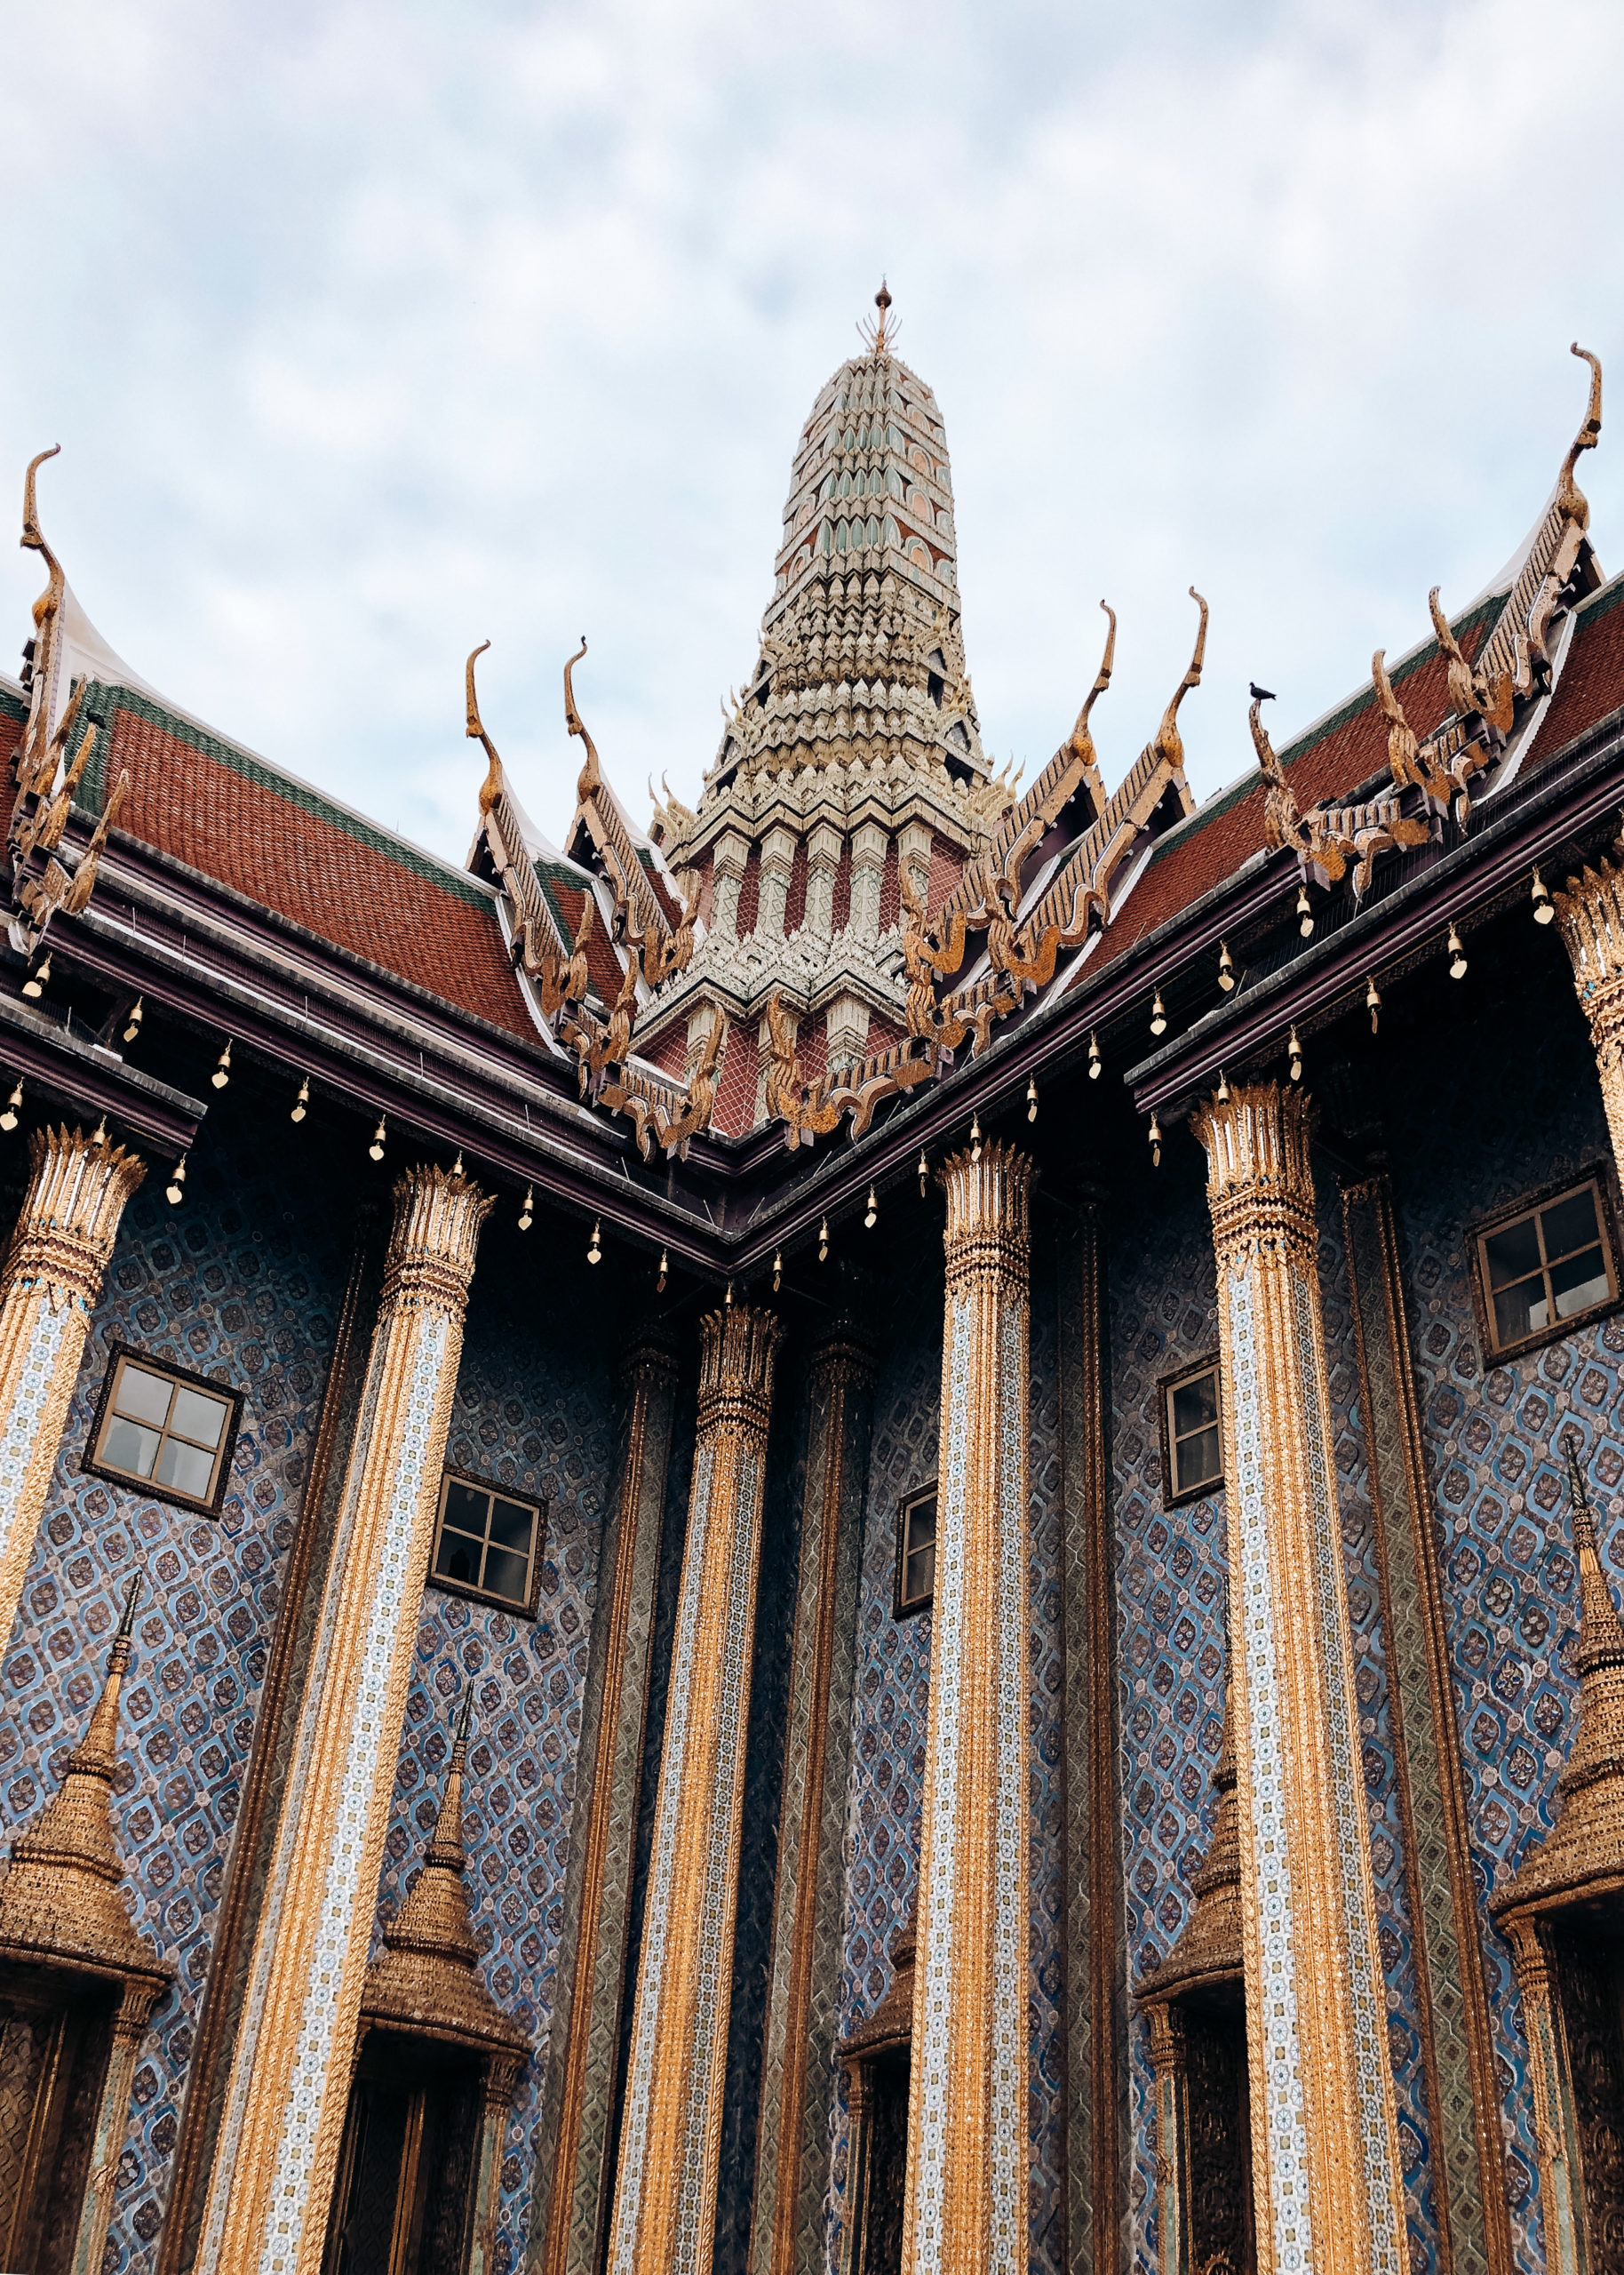 Wat Phra Kaew (temple du bouddha d’emeraude – Palais Royal) Bangkok Thailande